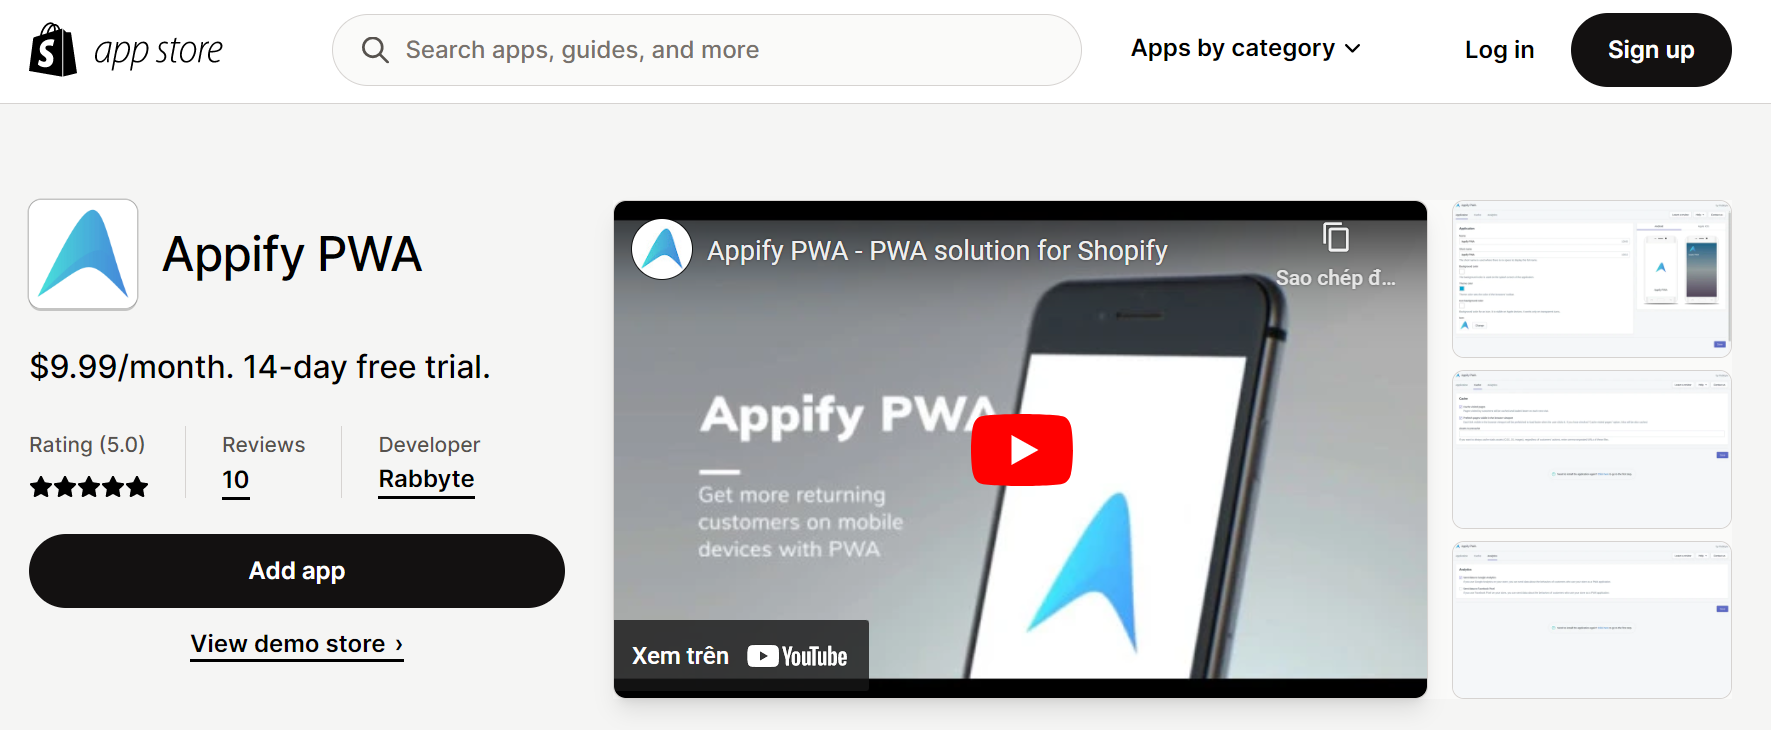 PWA for Shopify plus stores: Appify PWA